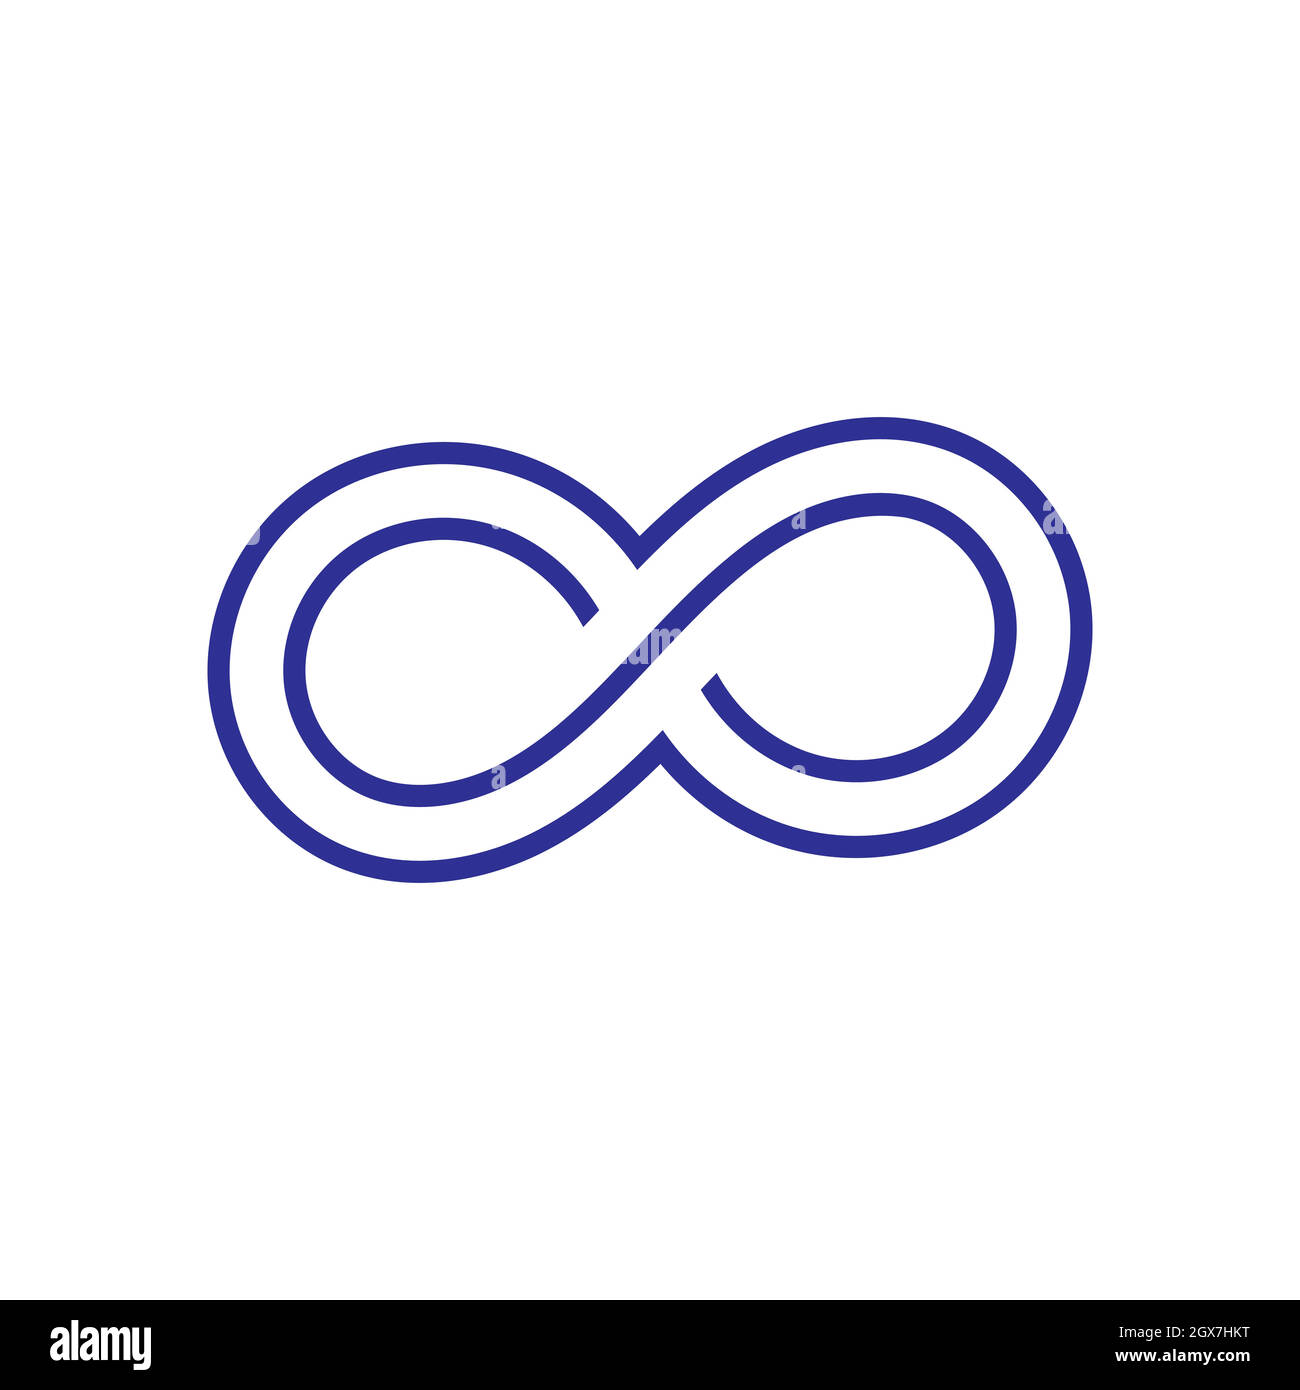 Infinity logo and symbol Design Vector Stock Vector